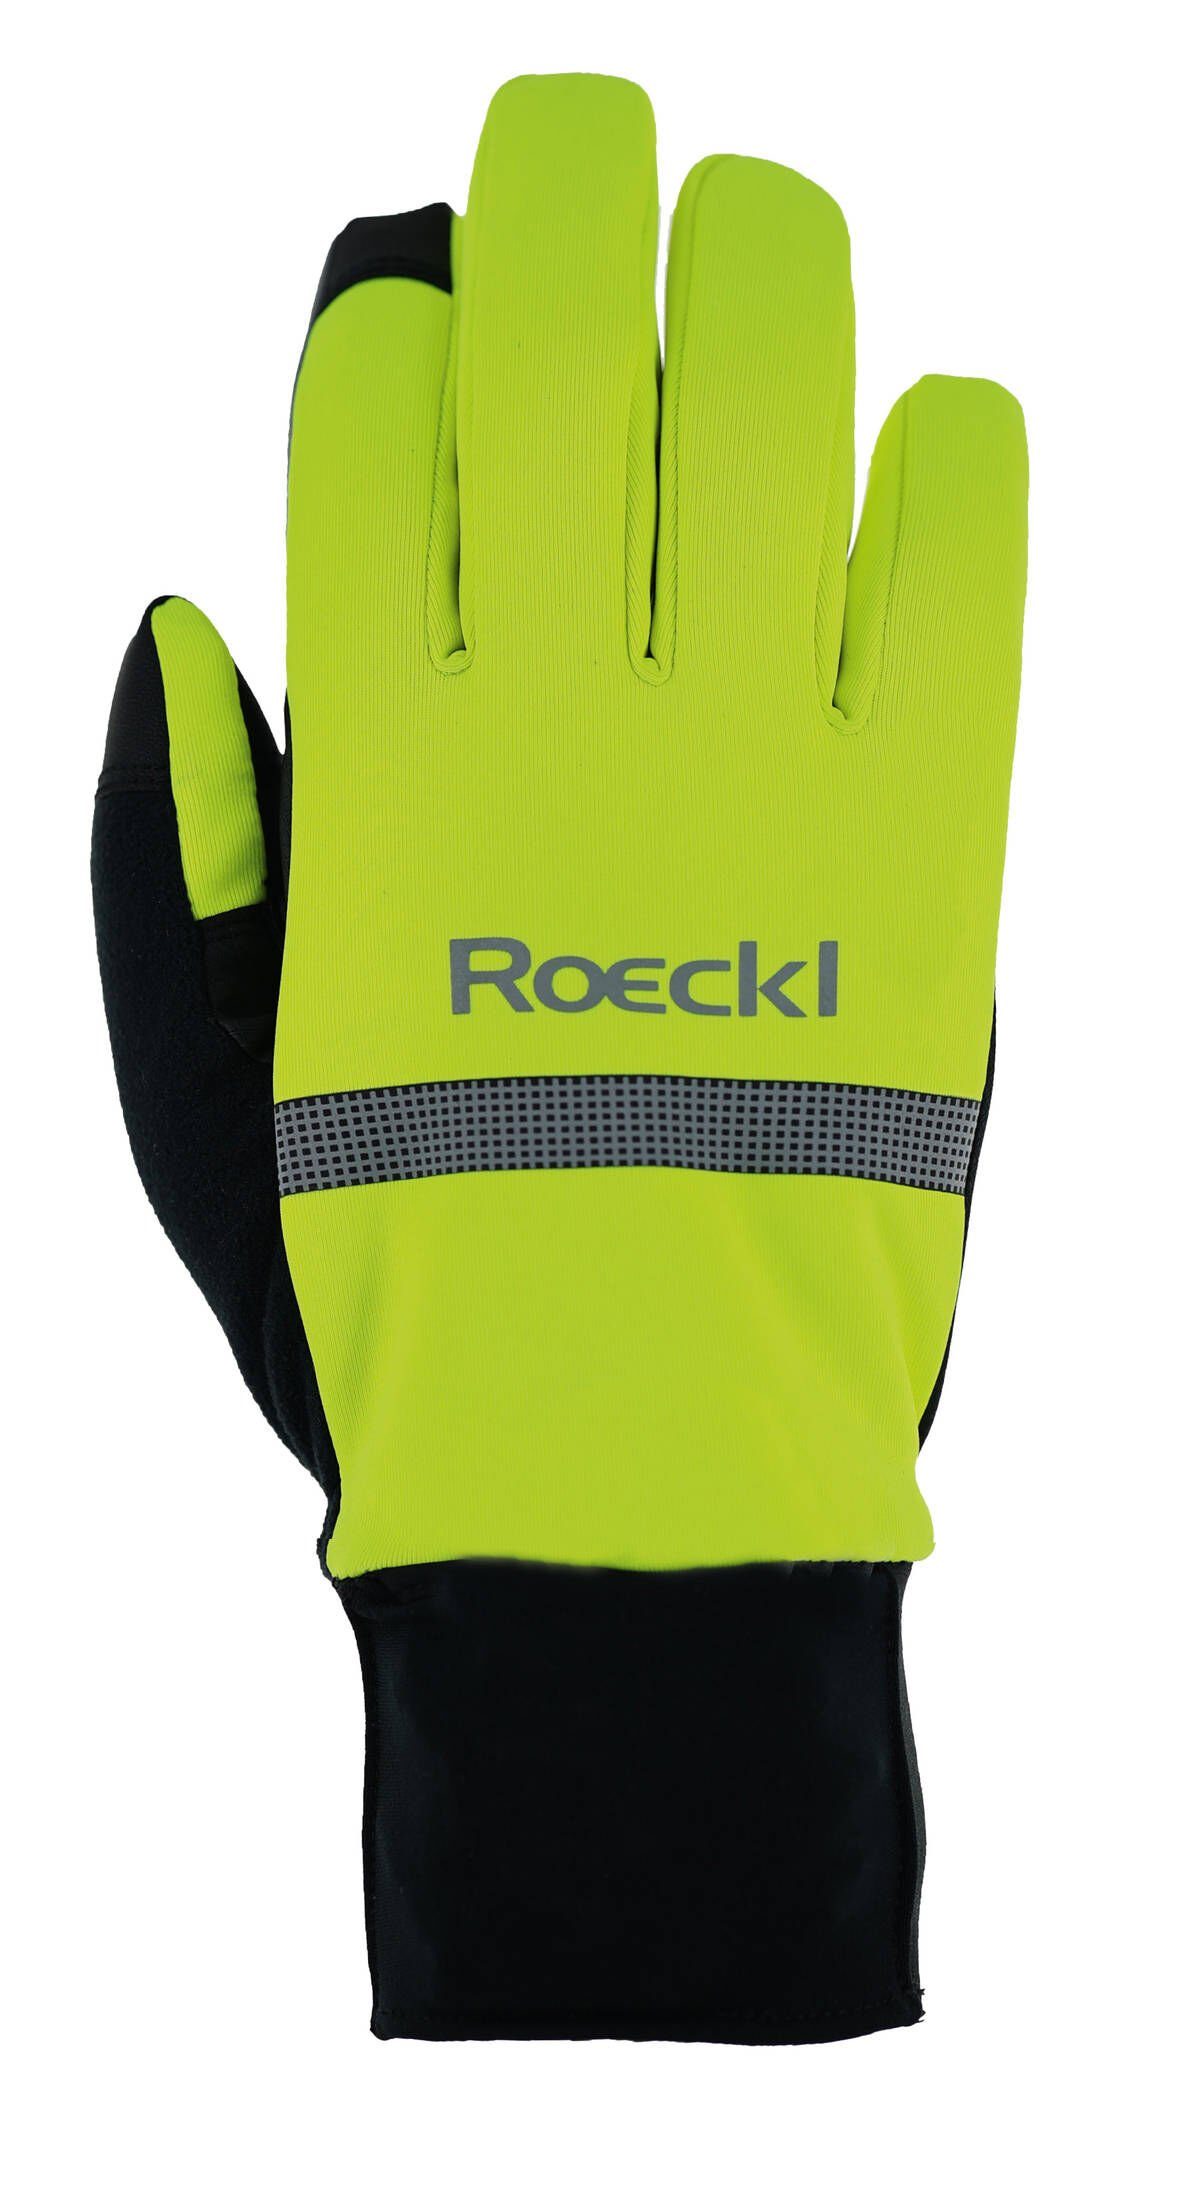 Roeckl SPORTS Skihandschuhe Herren Handschuhe RIVEO schwarz/lila (735)